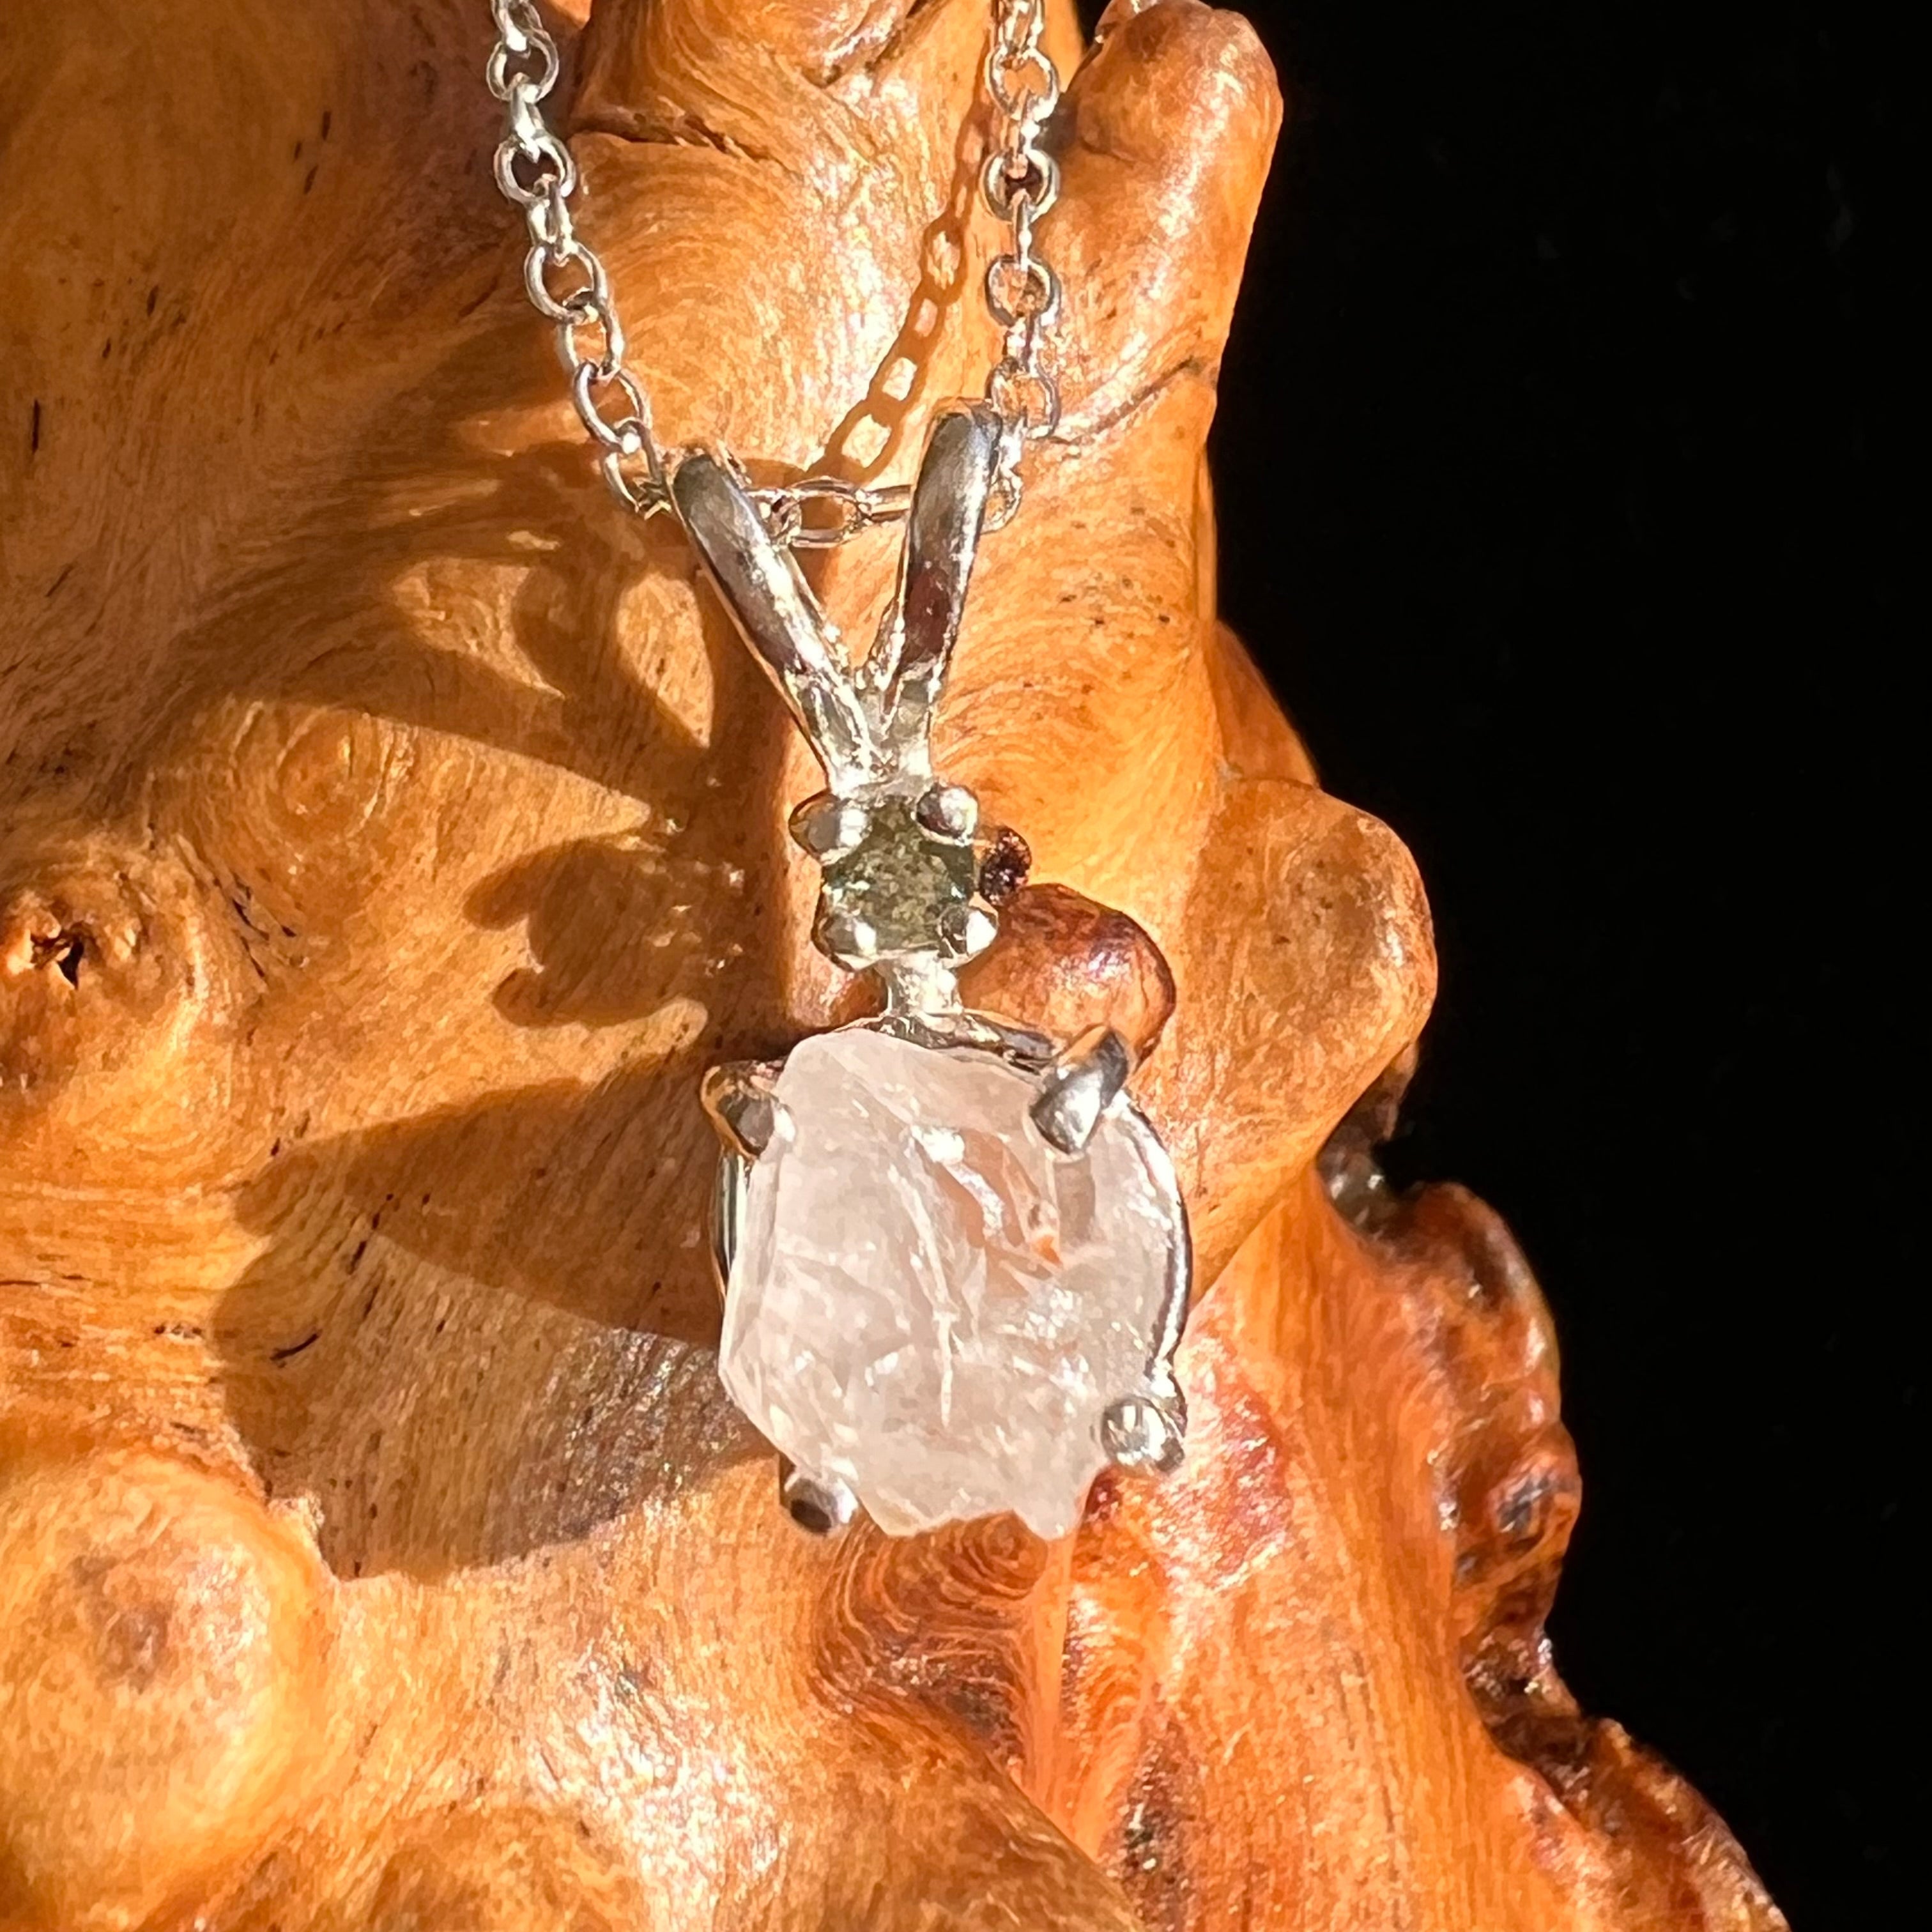 Czech Meteorite Impact Glass Crystal Necklace Pendant Energy Stone Healing  Crystals Green Moldavite Jewelry, SBOTTON8573. : Amazon.co.uk: Home &  Kitchen